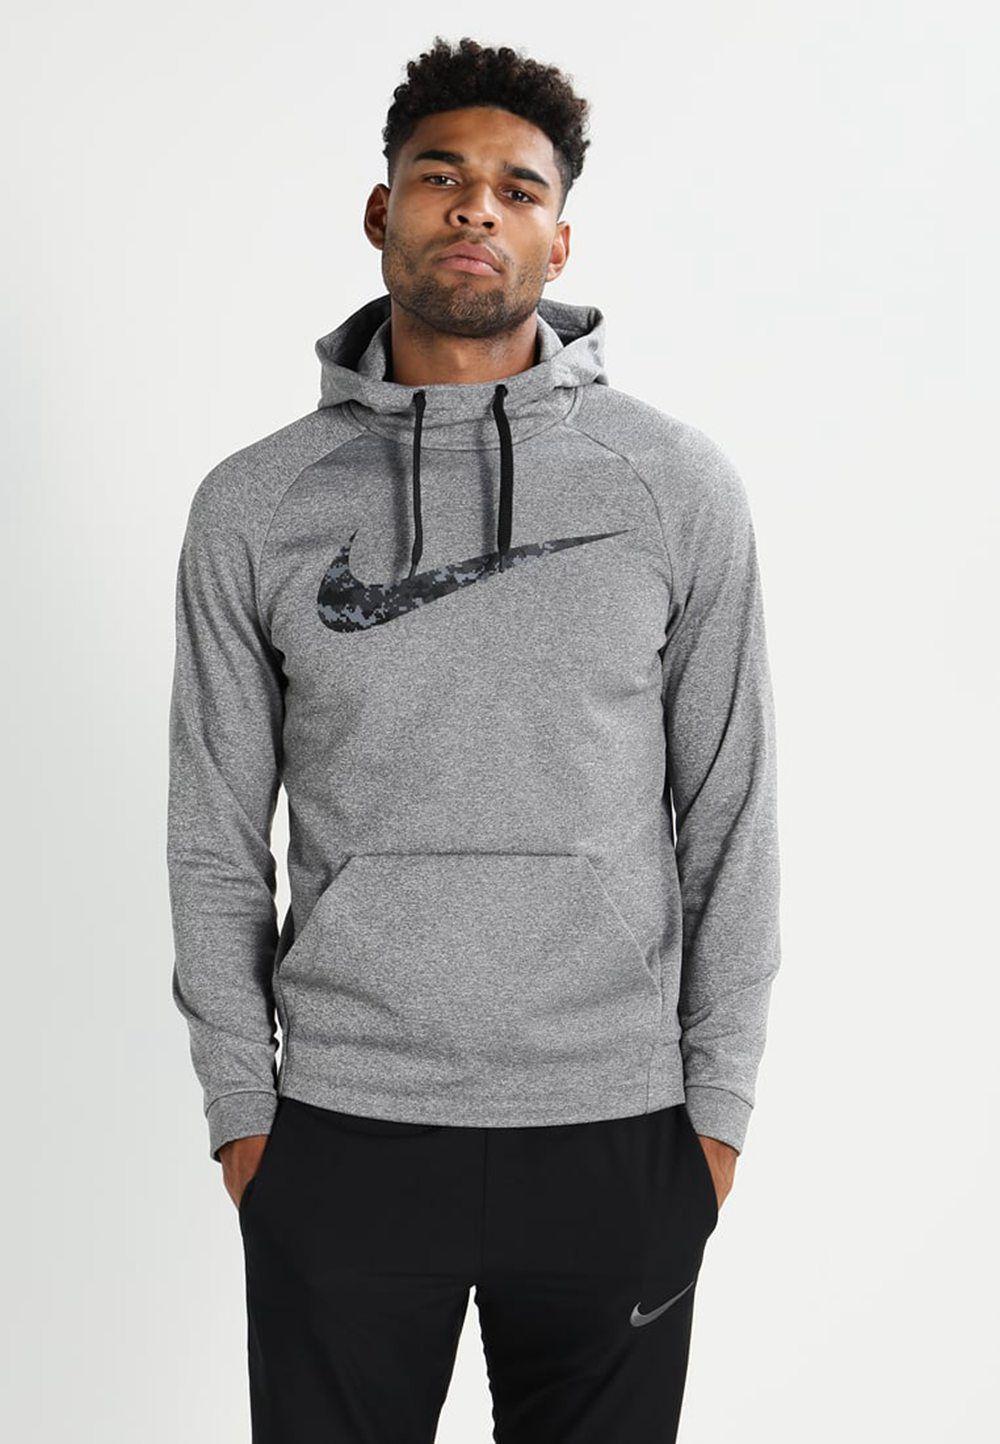 Nike Gray Camo Logo - Amazing Grey Nike Sweatshirt On Sale - Nike Therma Camo Logo Best ...